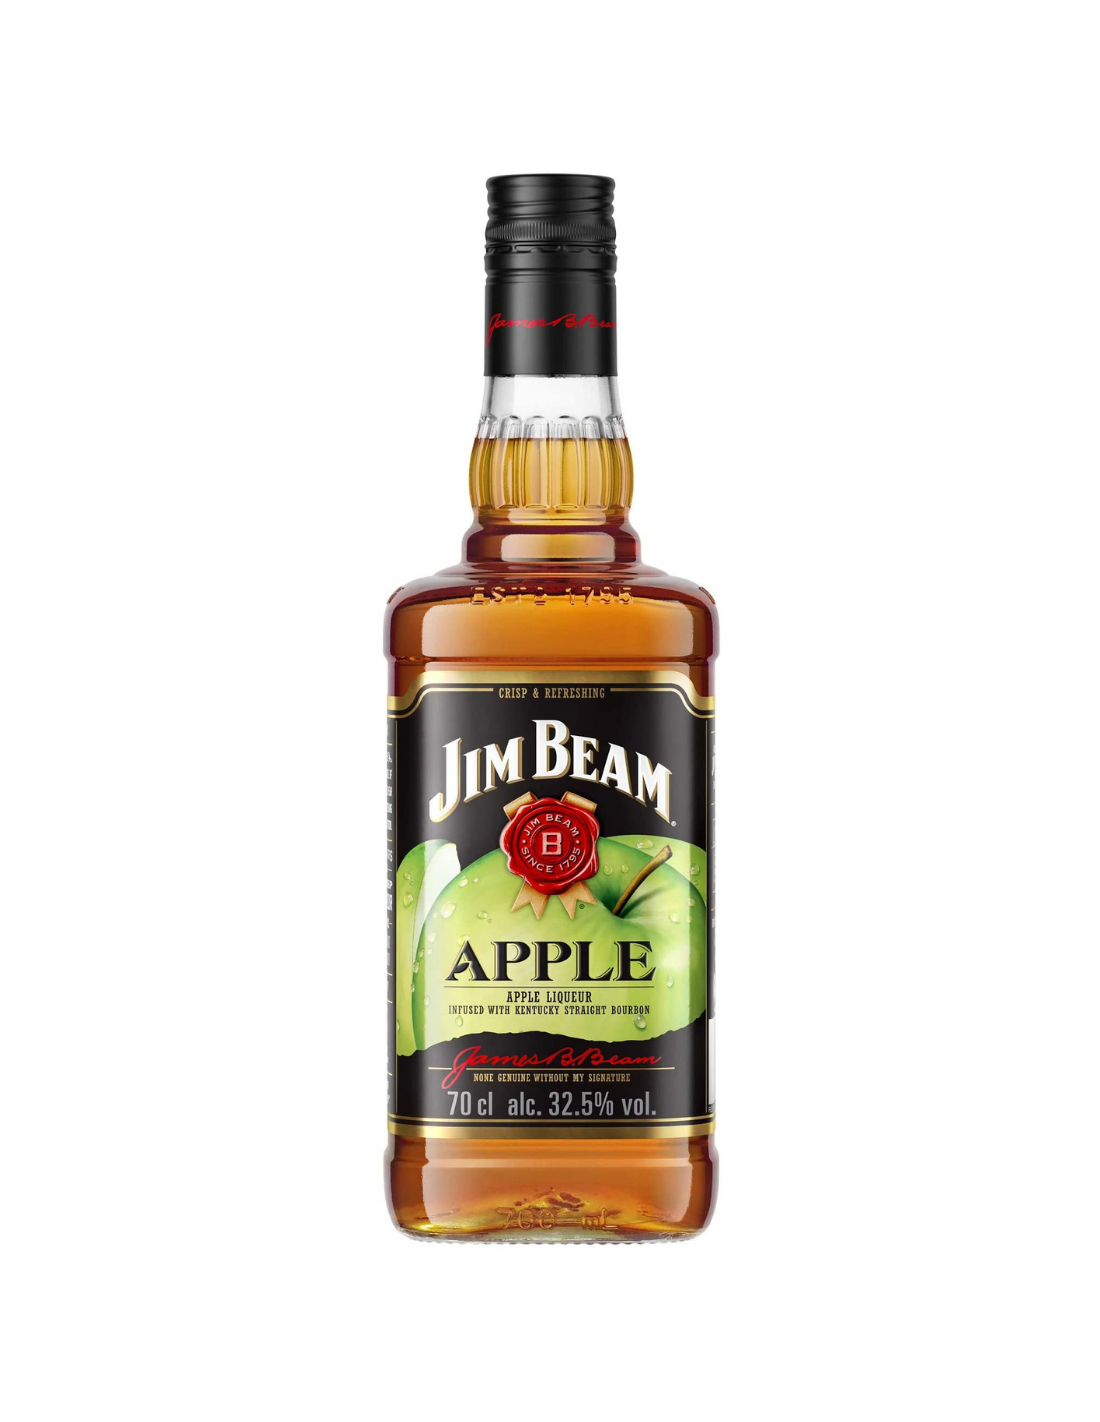 Whisky Jim Beam Apple, 0.7L, 32.5% alc., SUA alcooldiscount.ro